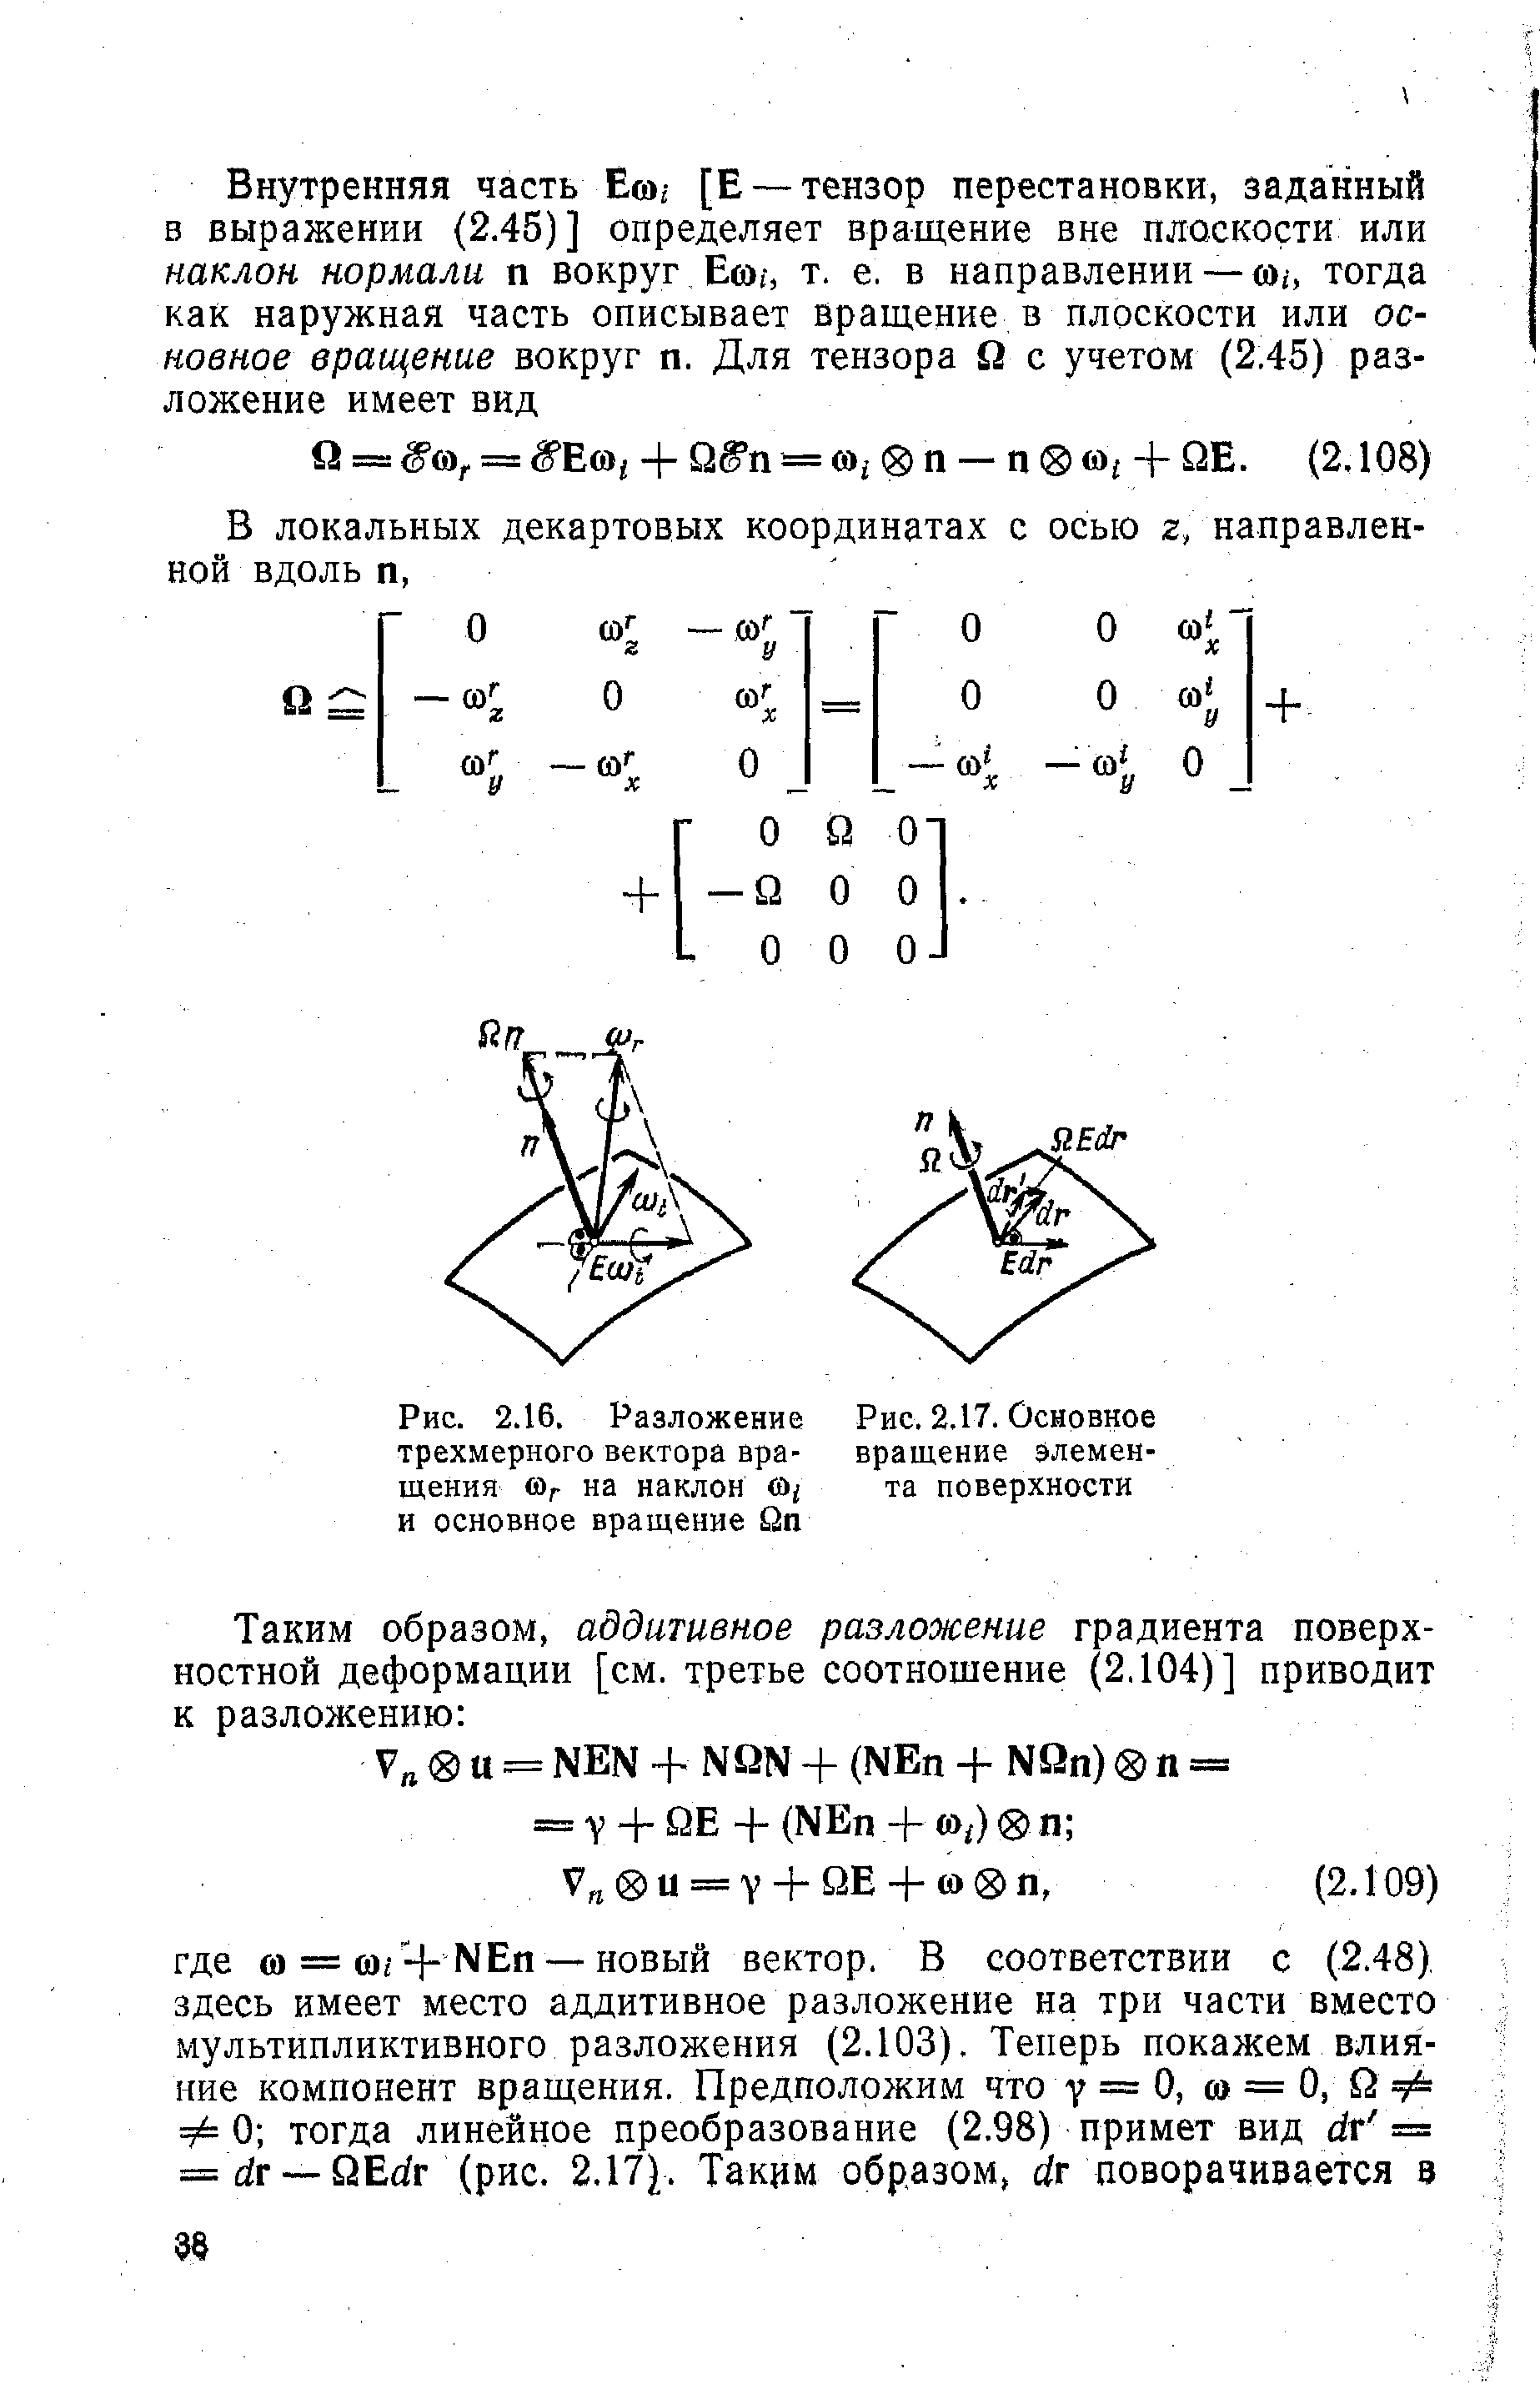 Рис. 2.16. Разложение трехмерного вектора вращения г на наклон и основное вращение йп
